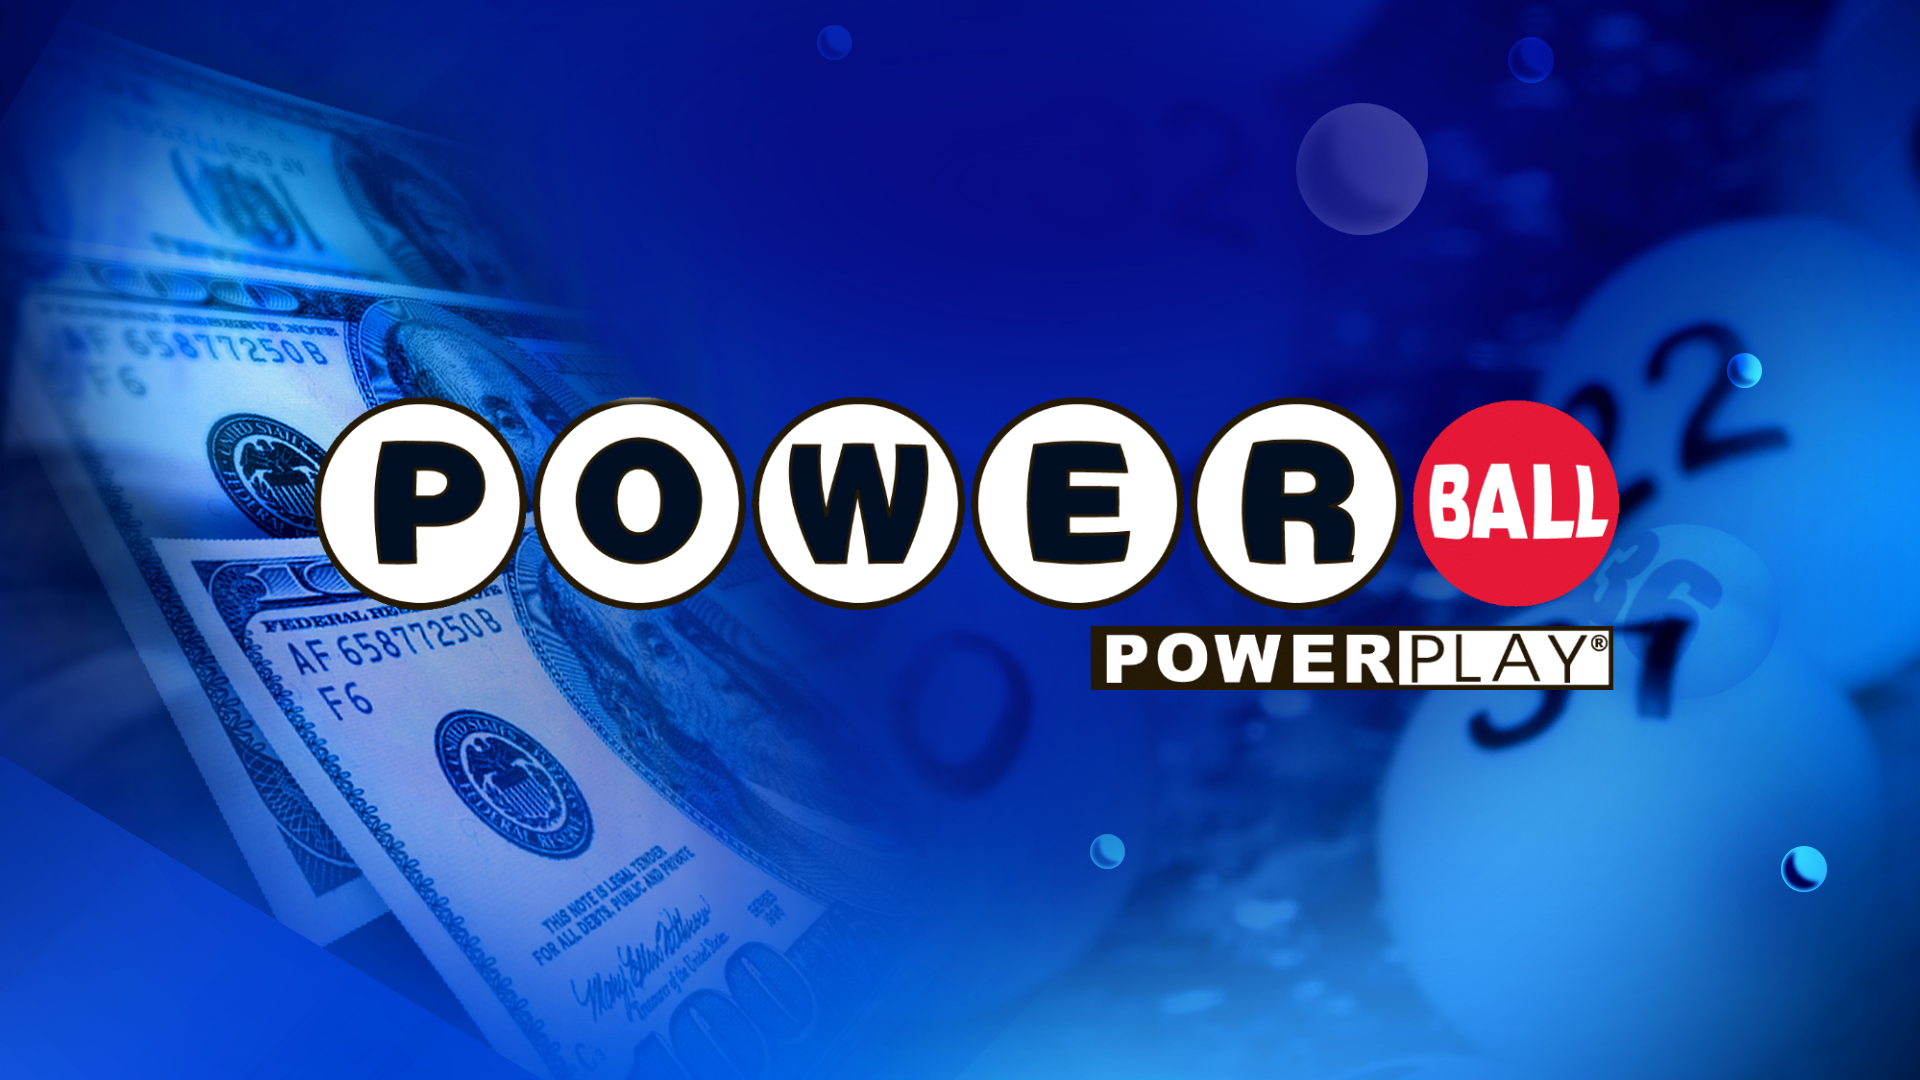 Ticket sold in Michigan wins $842 million Powerball jackpot in 1st